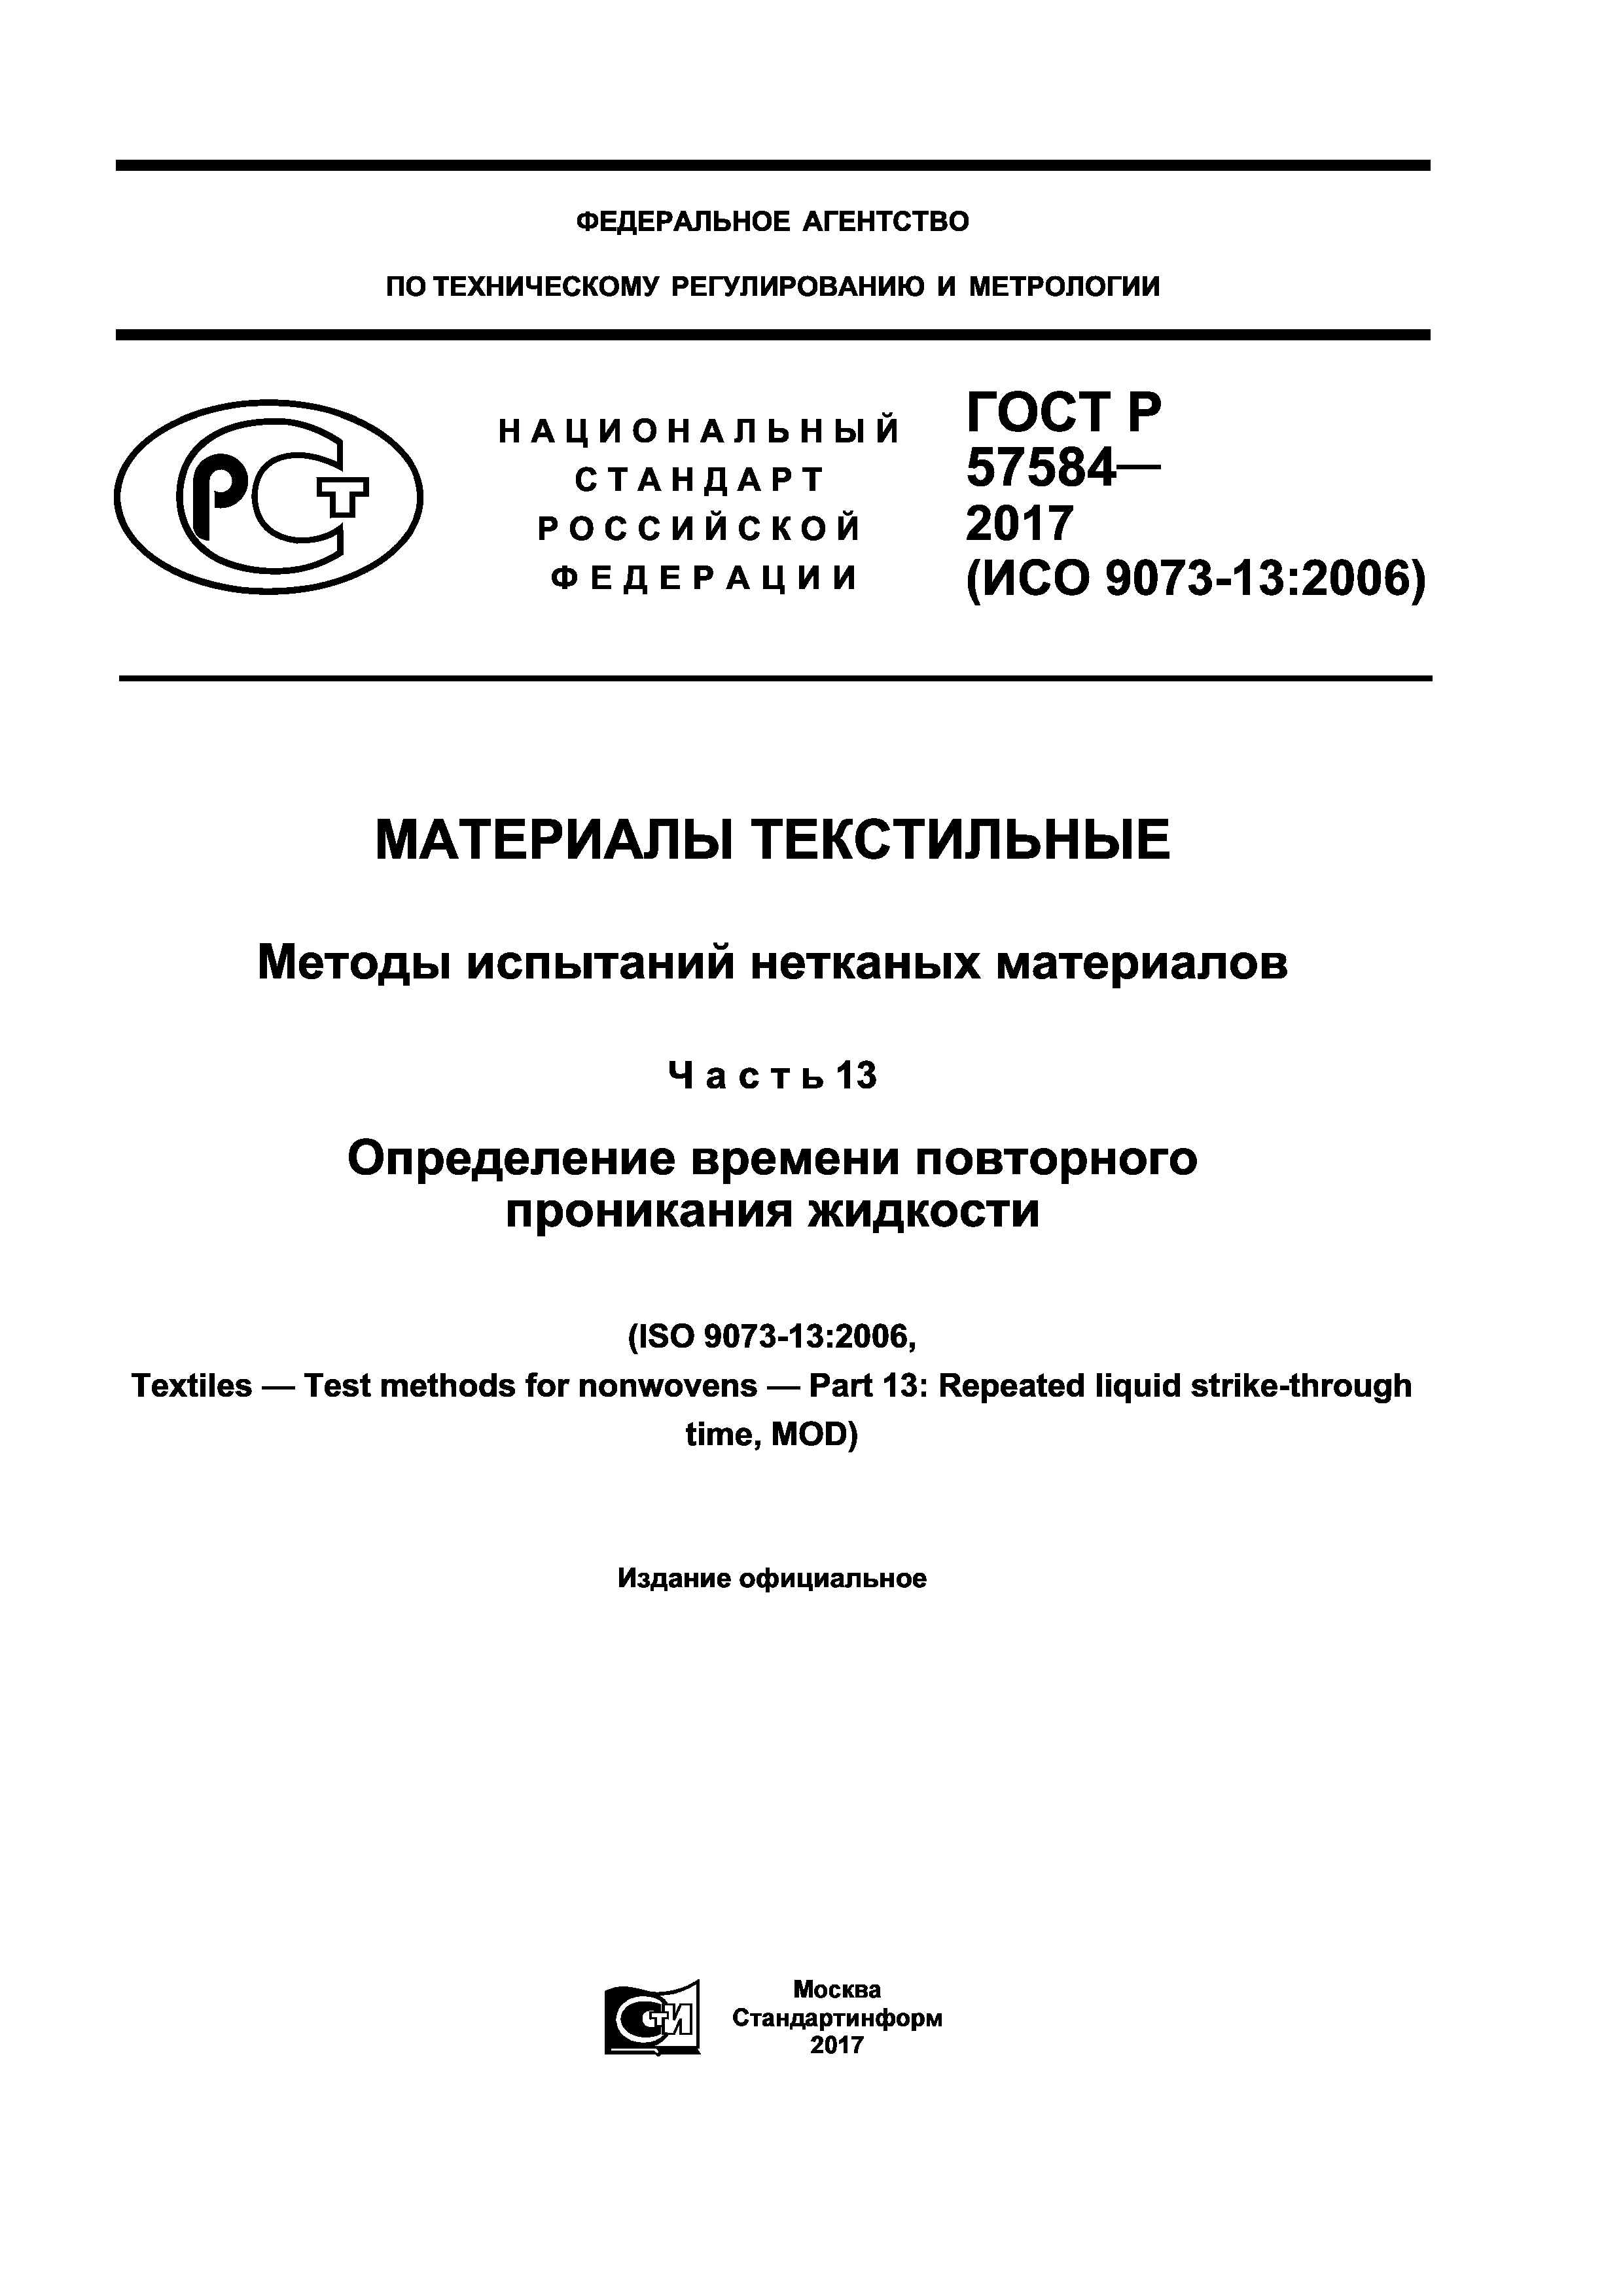 ГОСТ Р 57584-2017